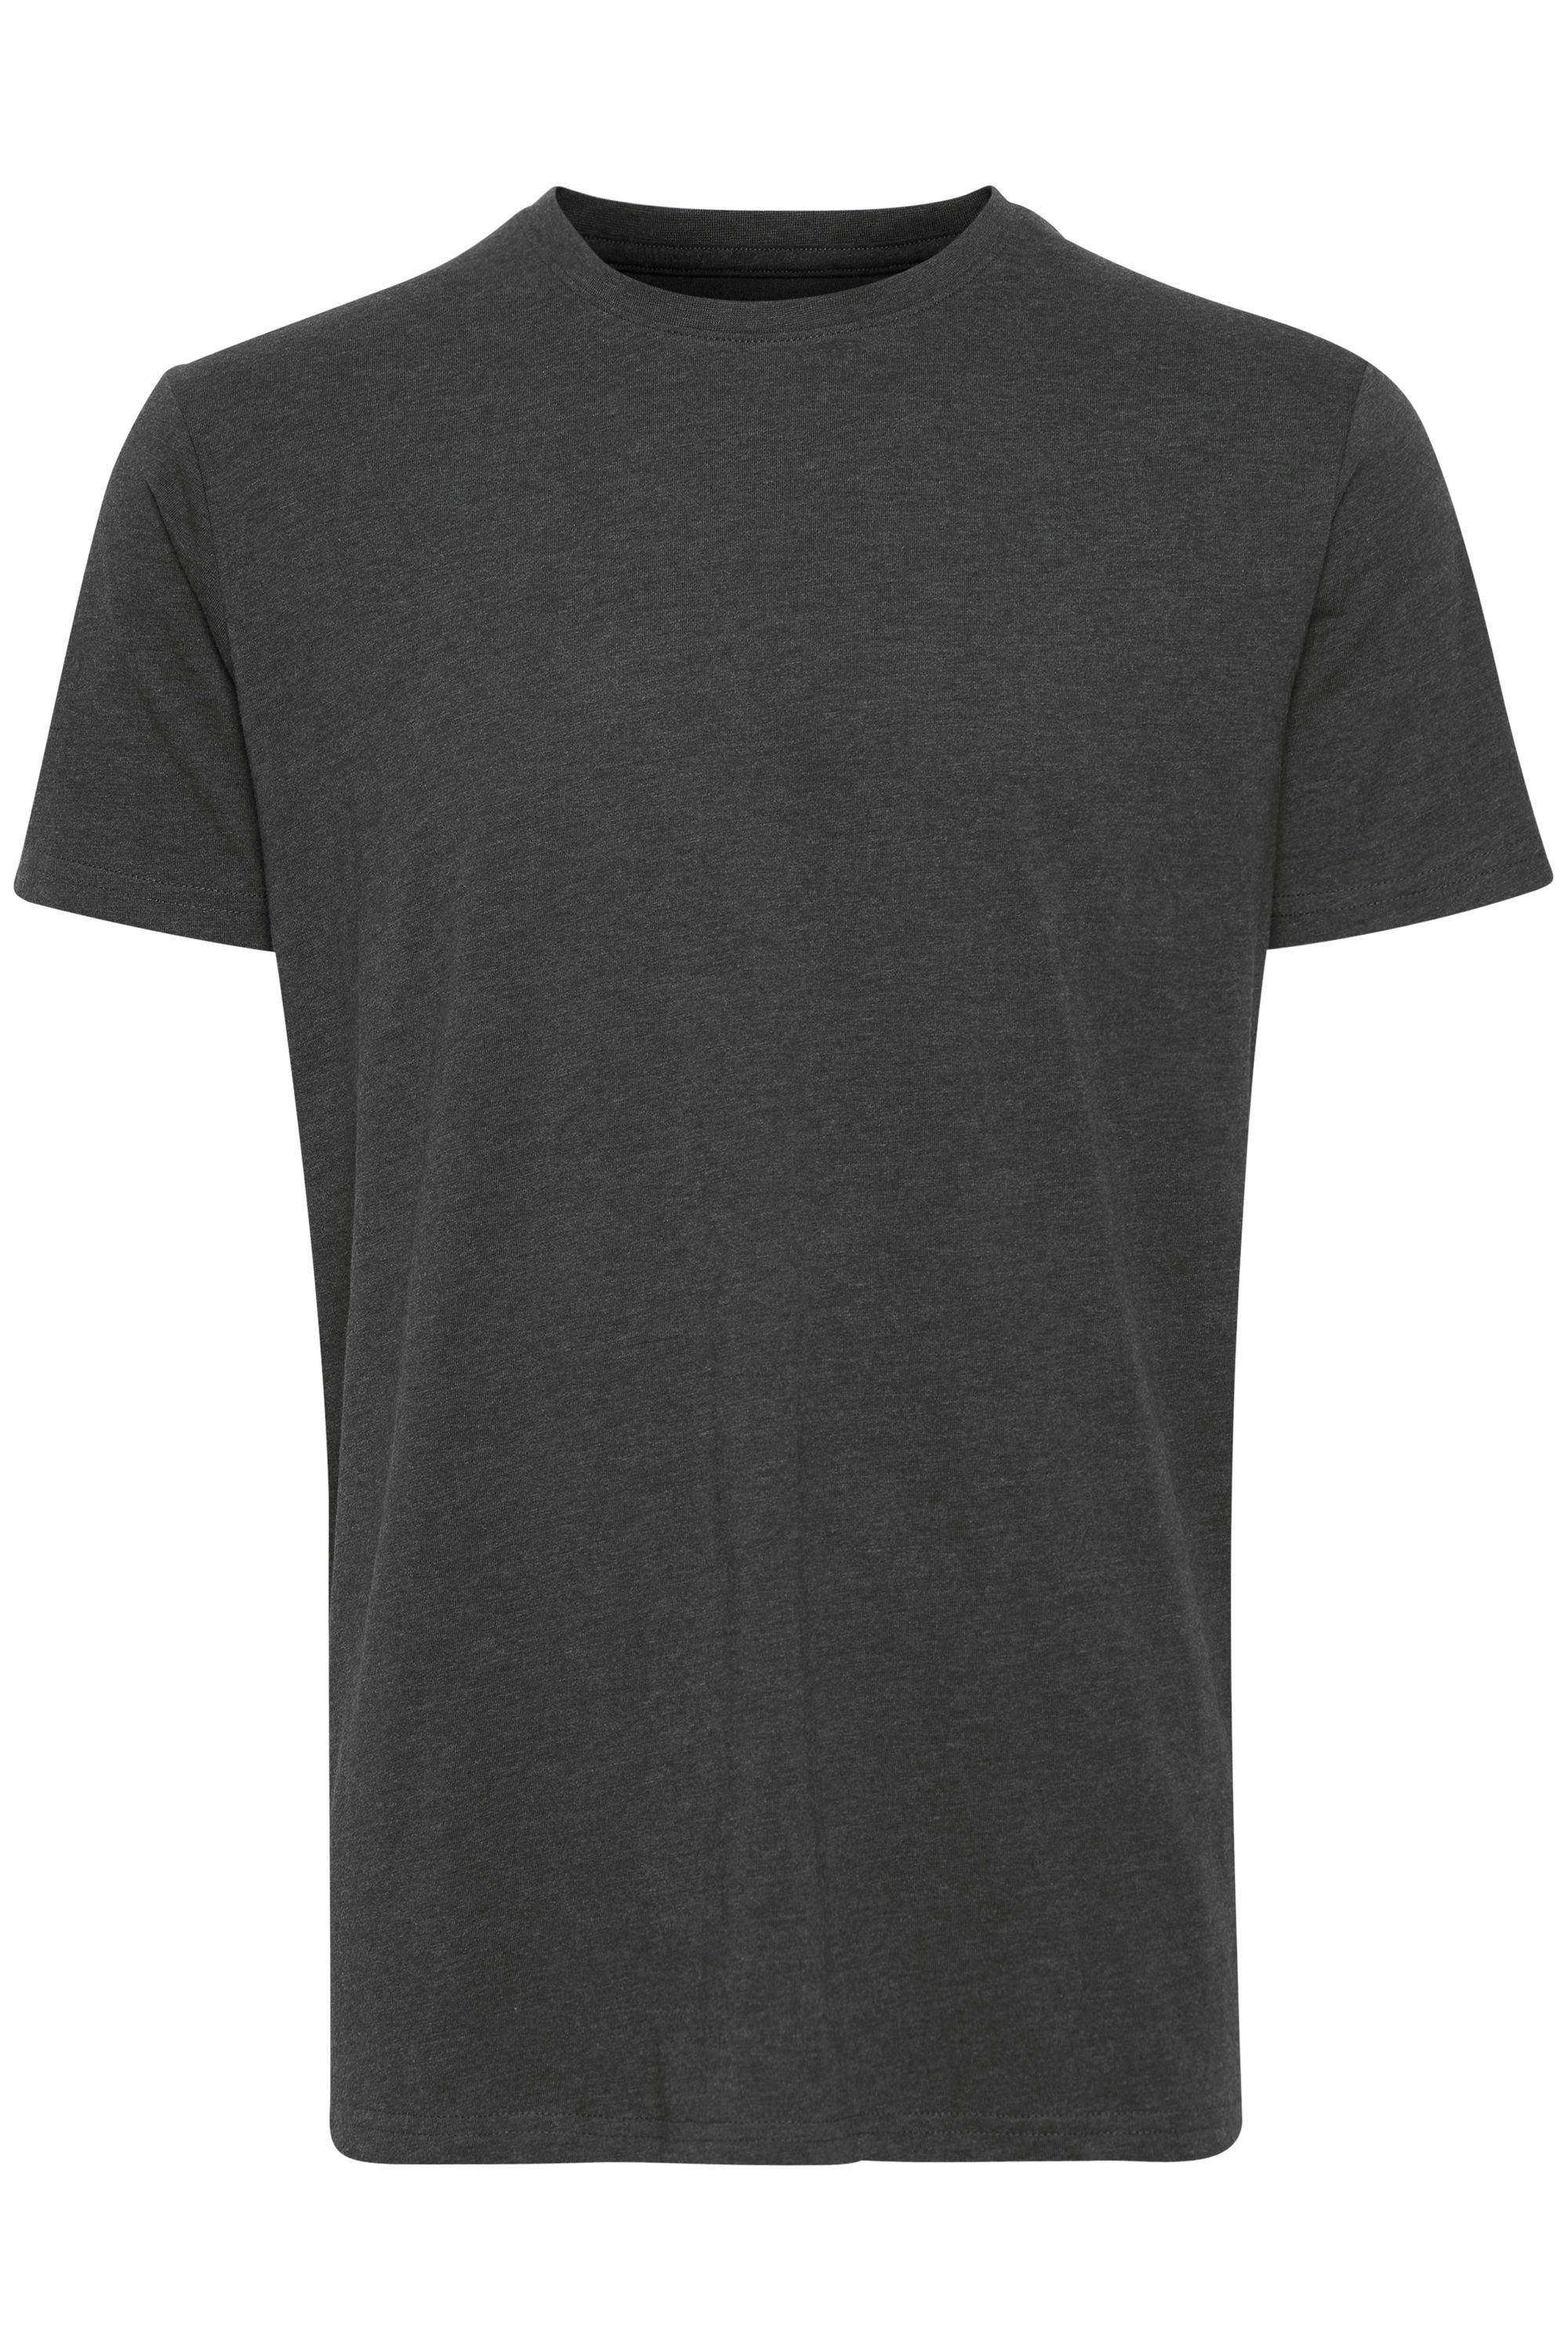 GREY !Solid T-Shirt 6194761, Rock SS (798288) Basic T-Shirt Tee 21103651 - M DAR -